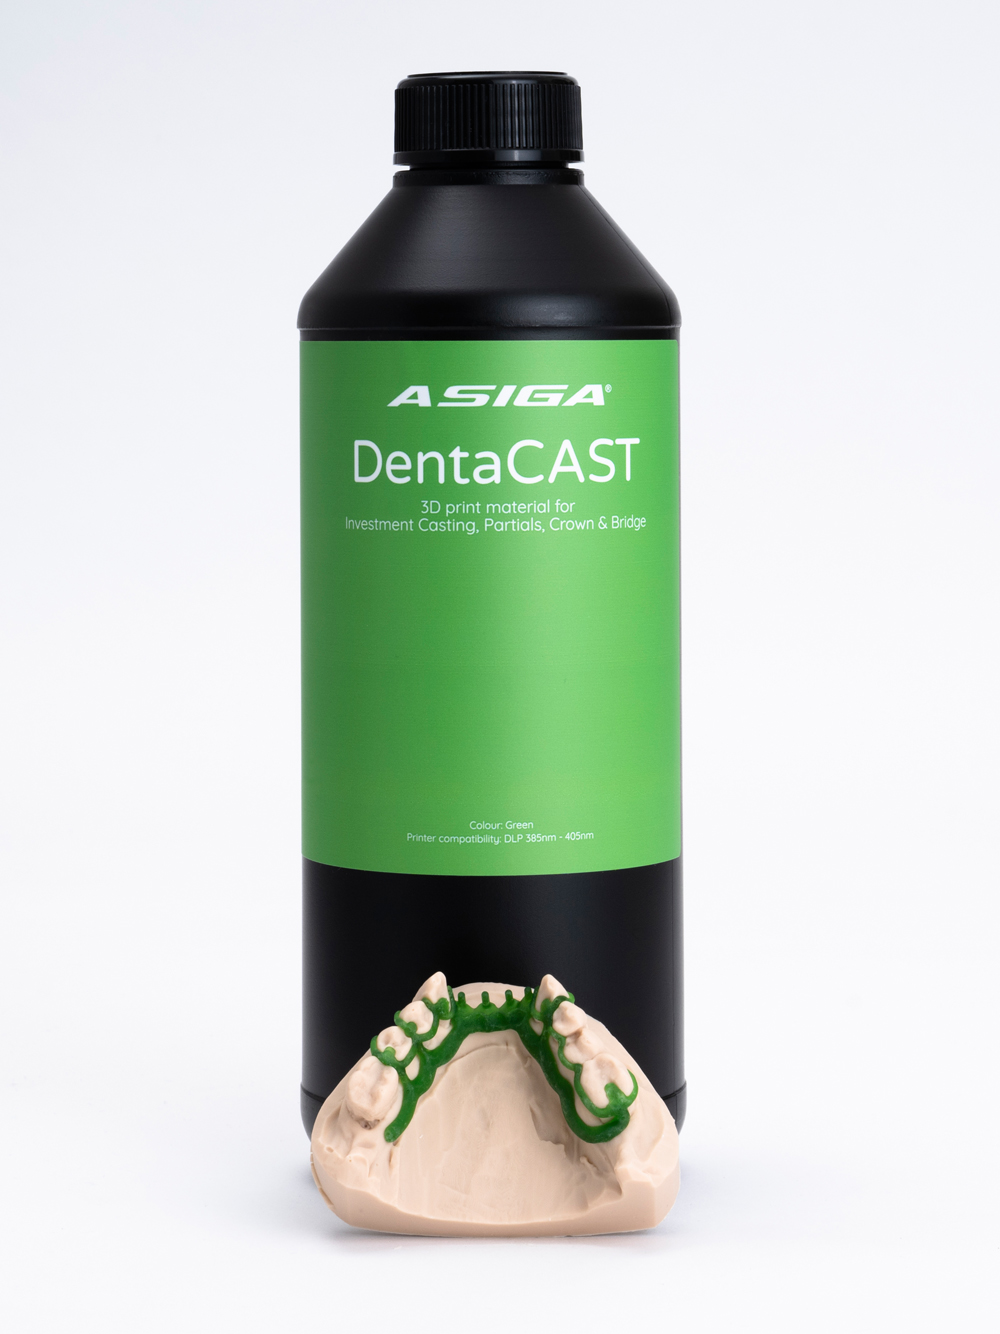 Asiga-DentaCAST-web